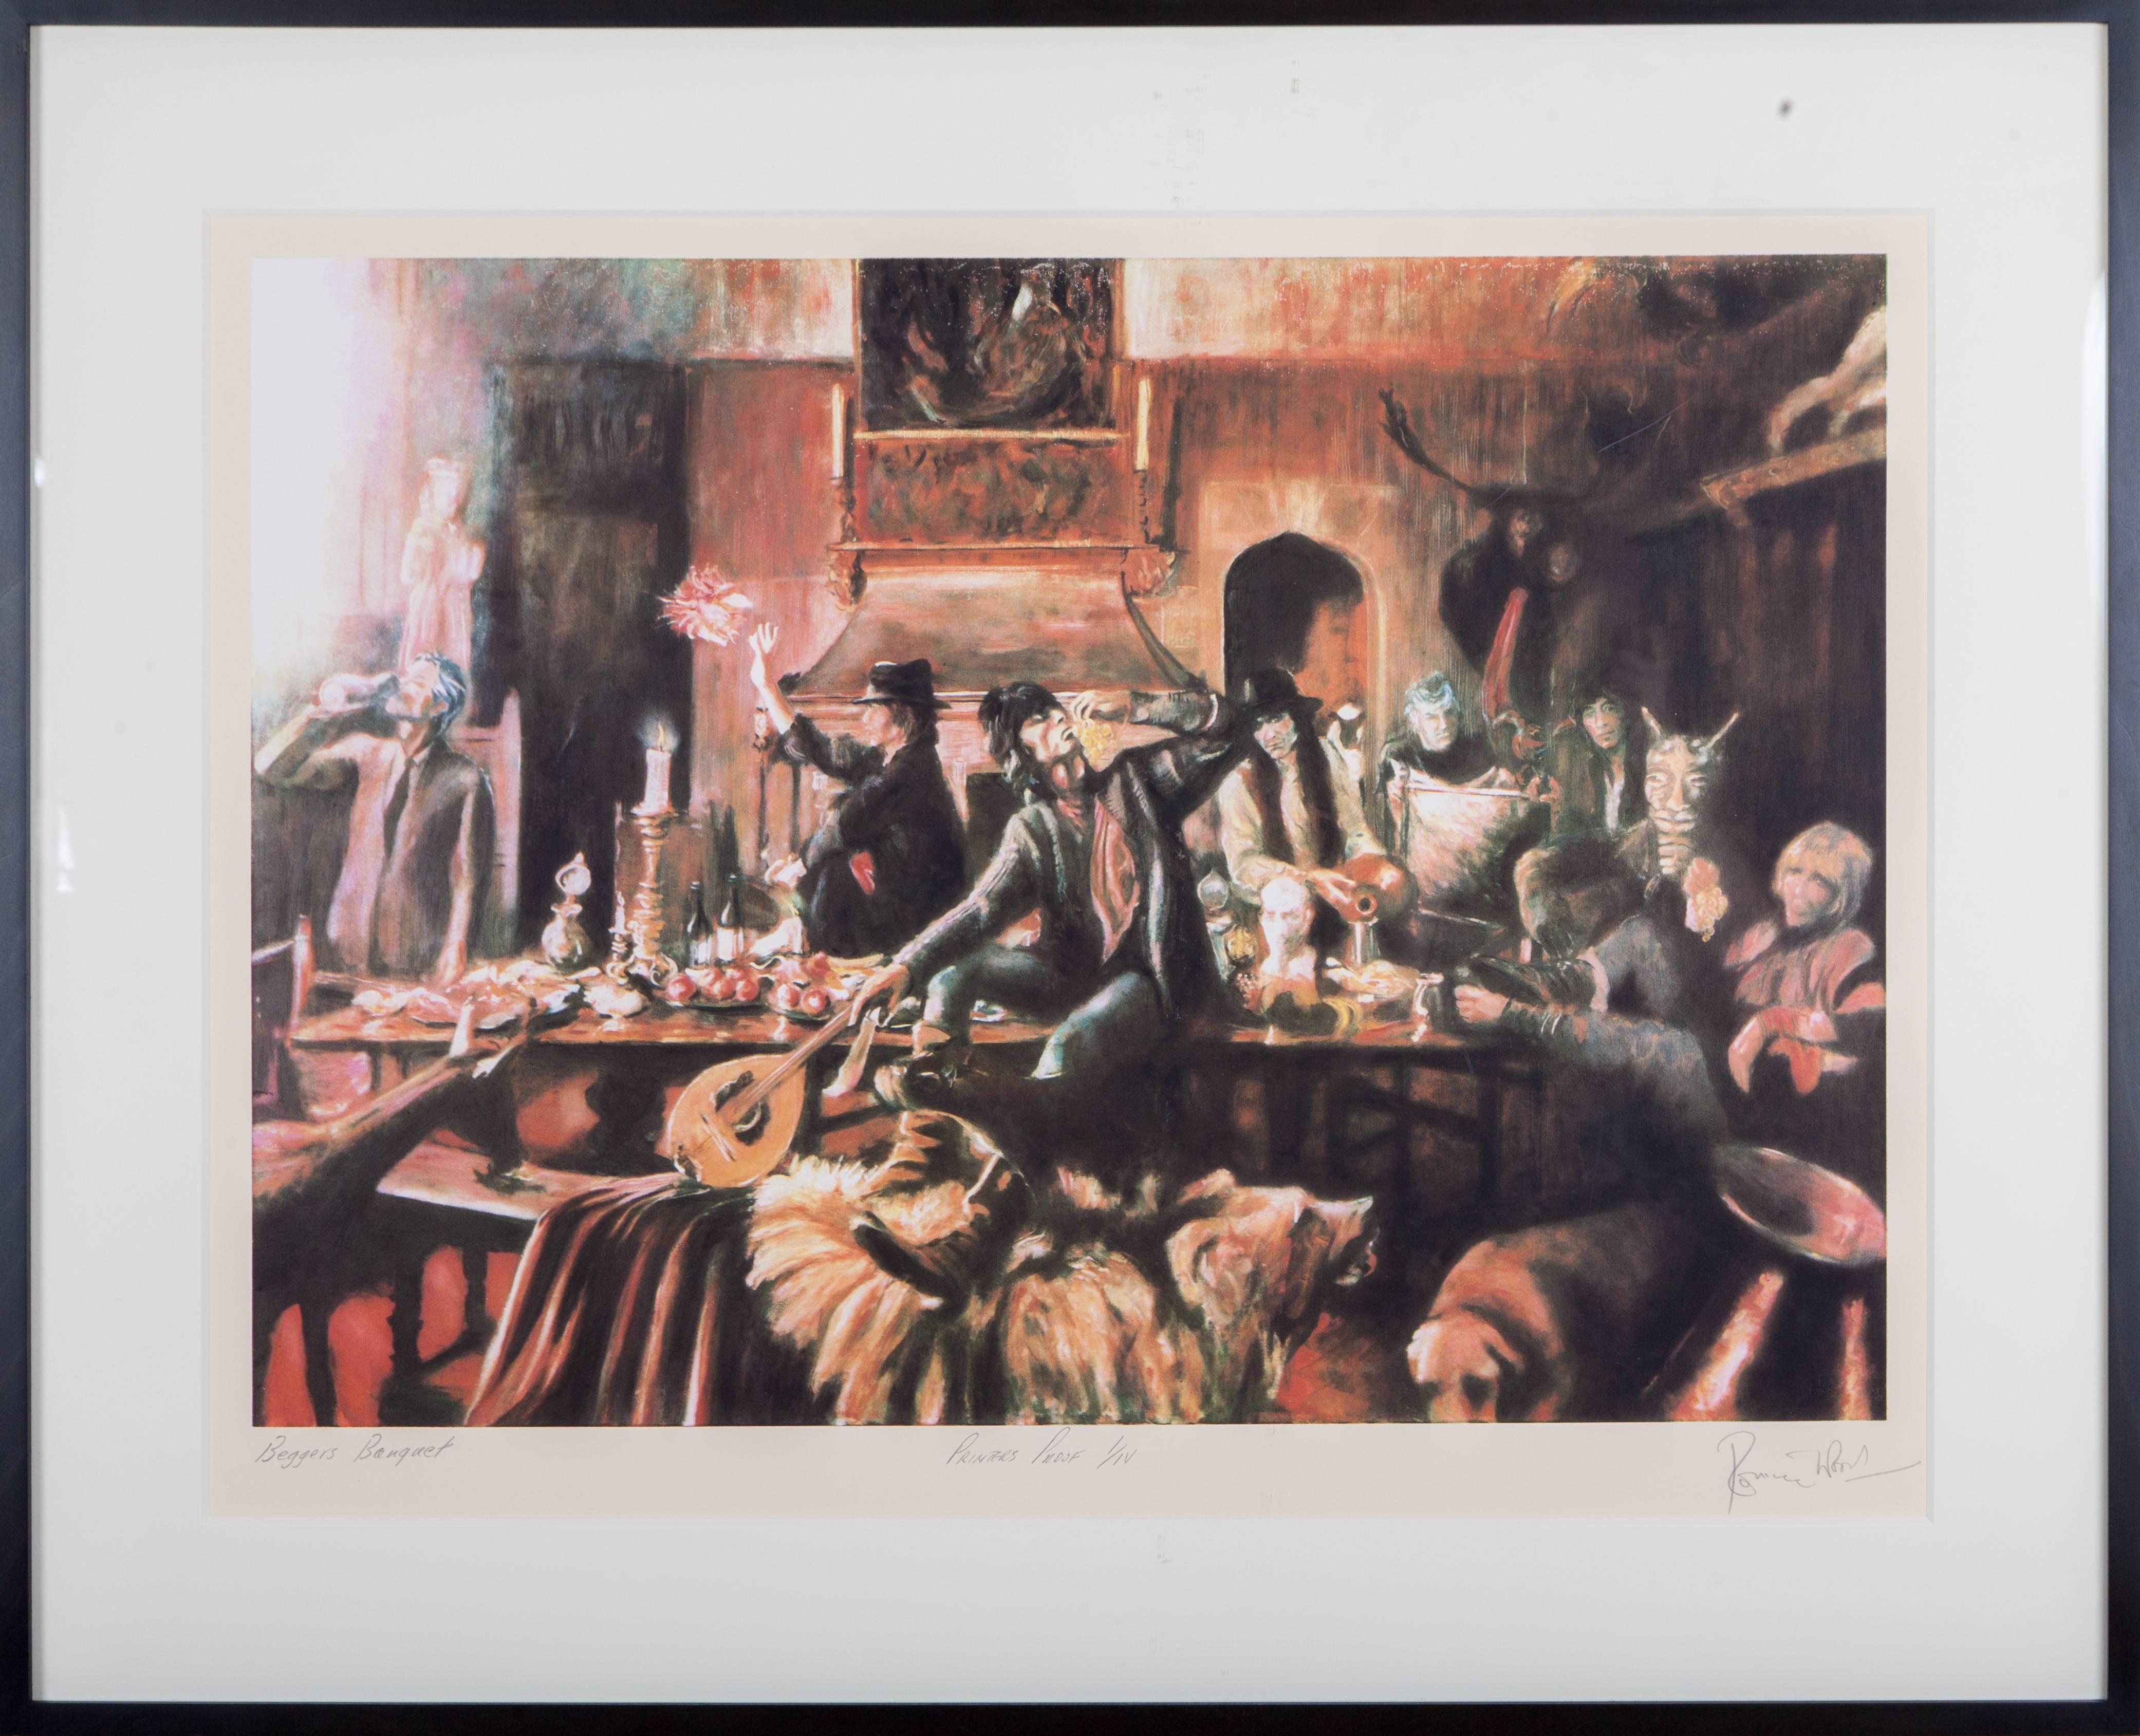 Ronnie Wood Figurative Print - Beggars Banquet 